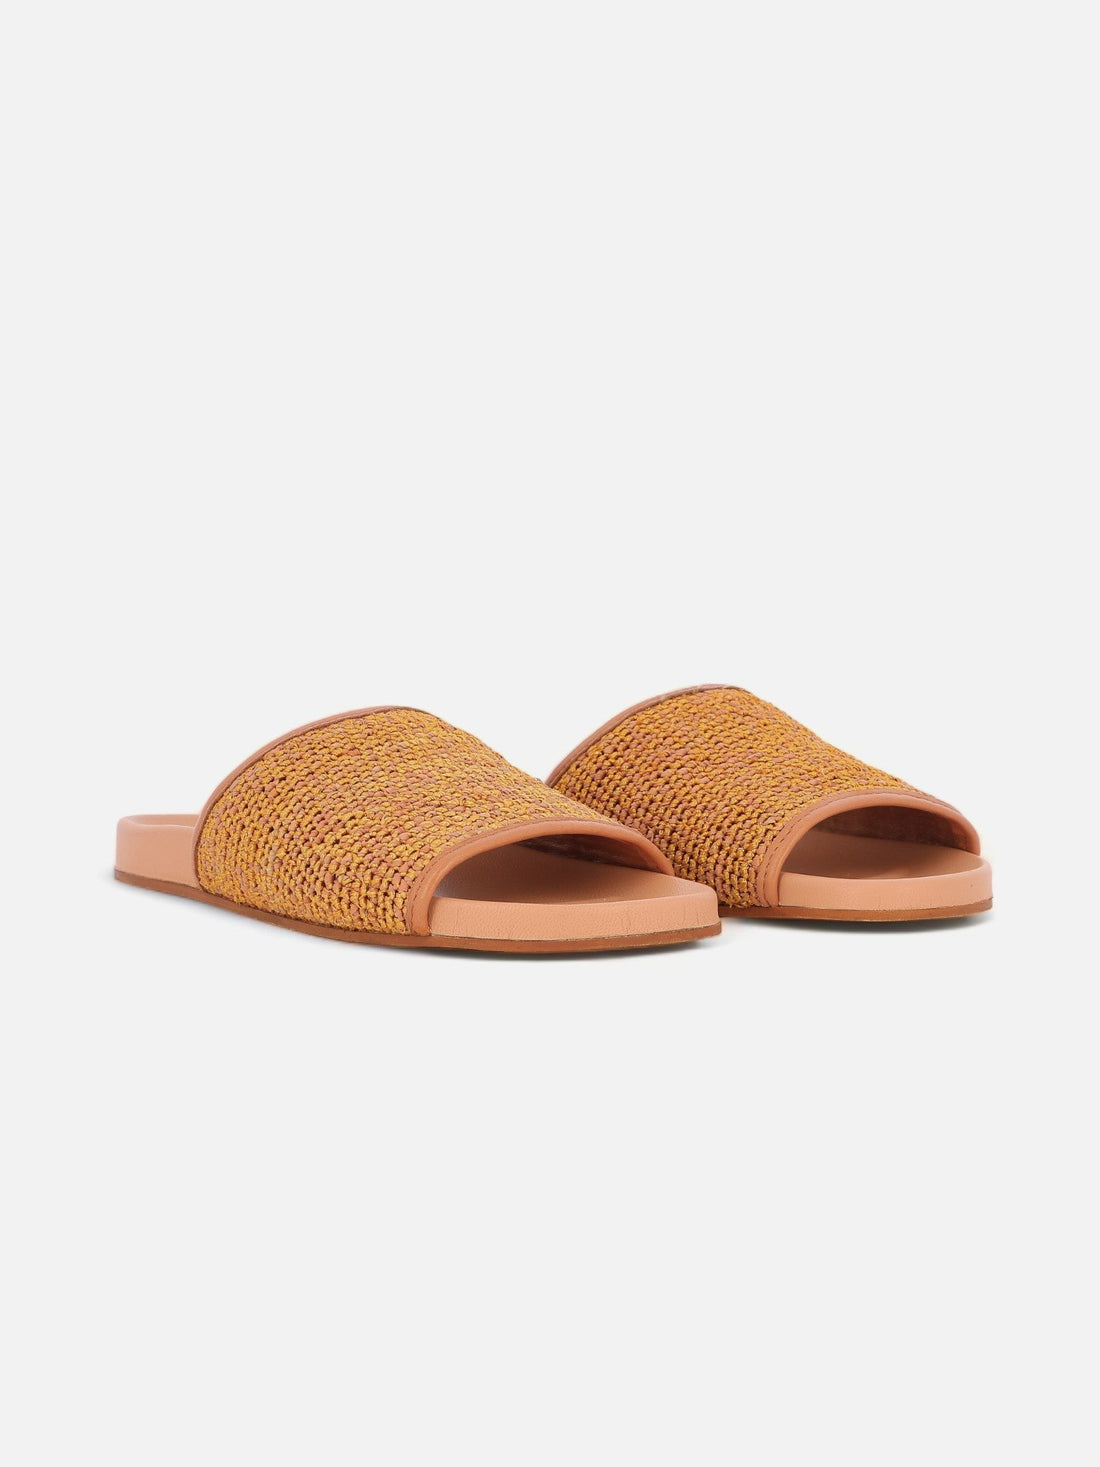 QUETAL sandals, brown &amp; gold raffia